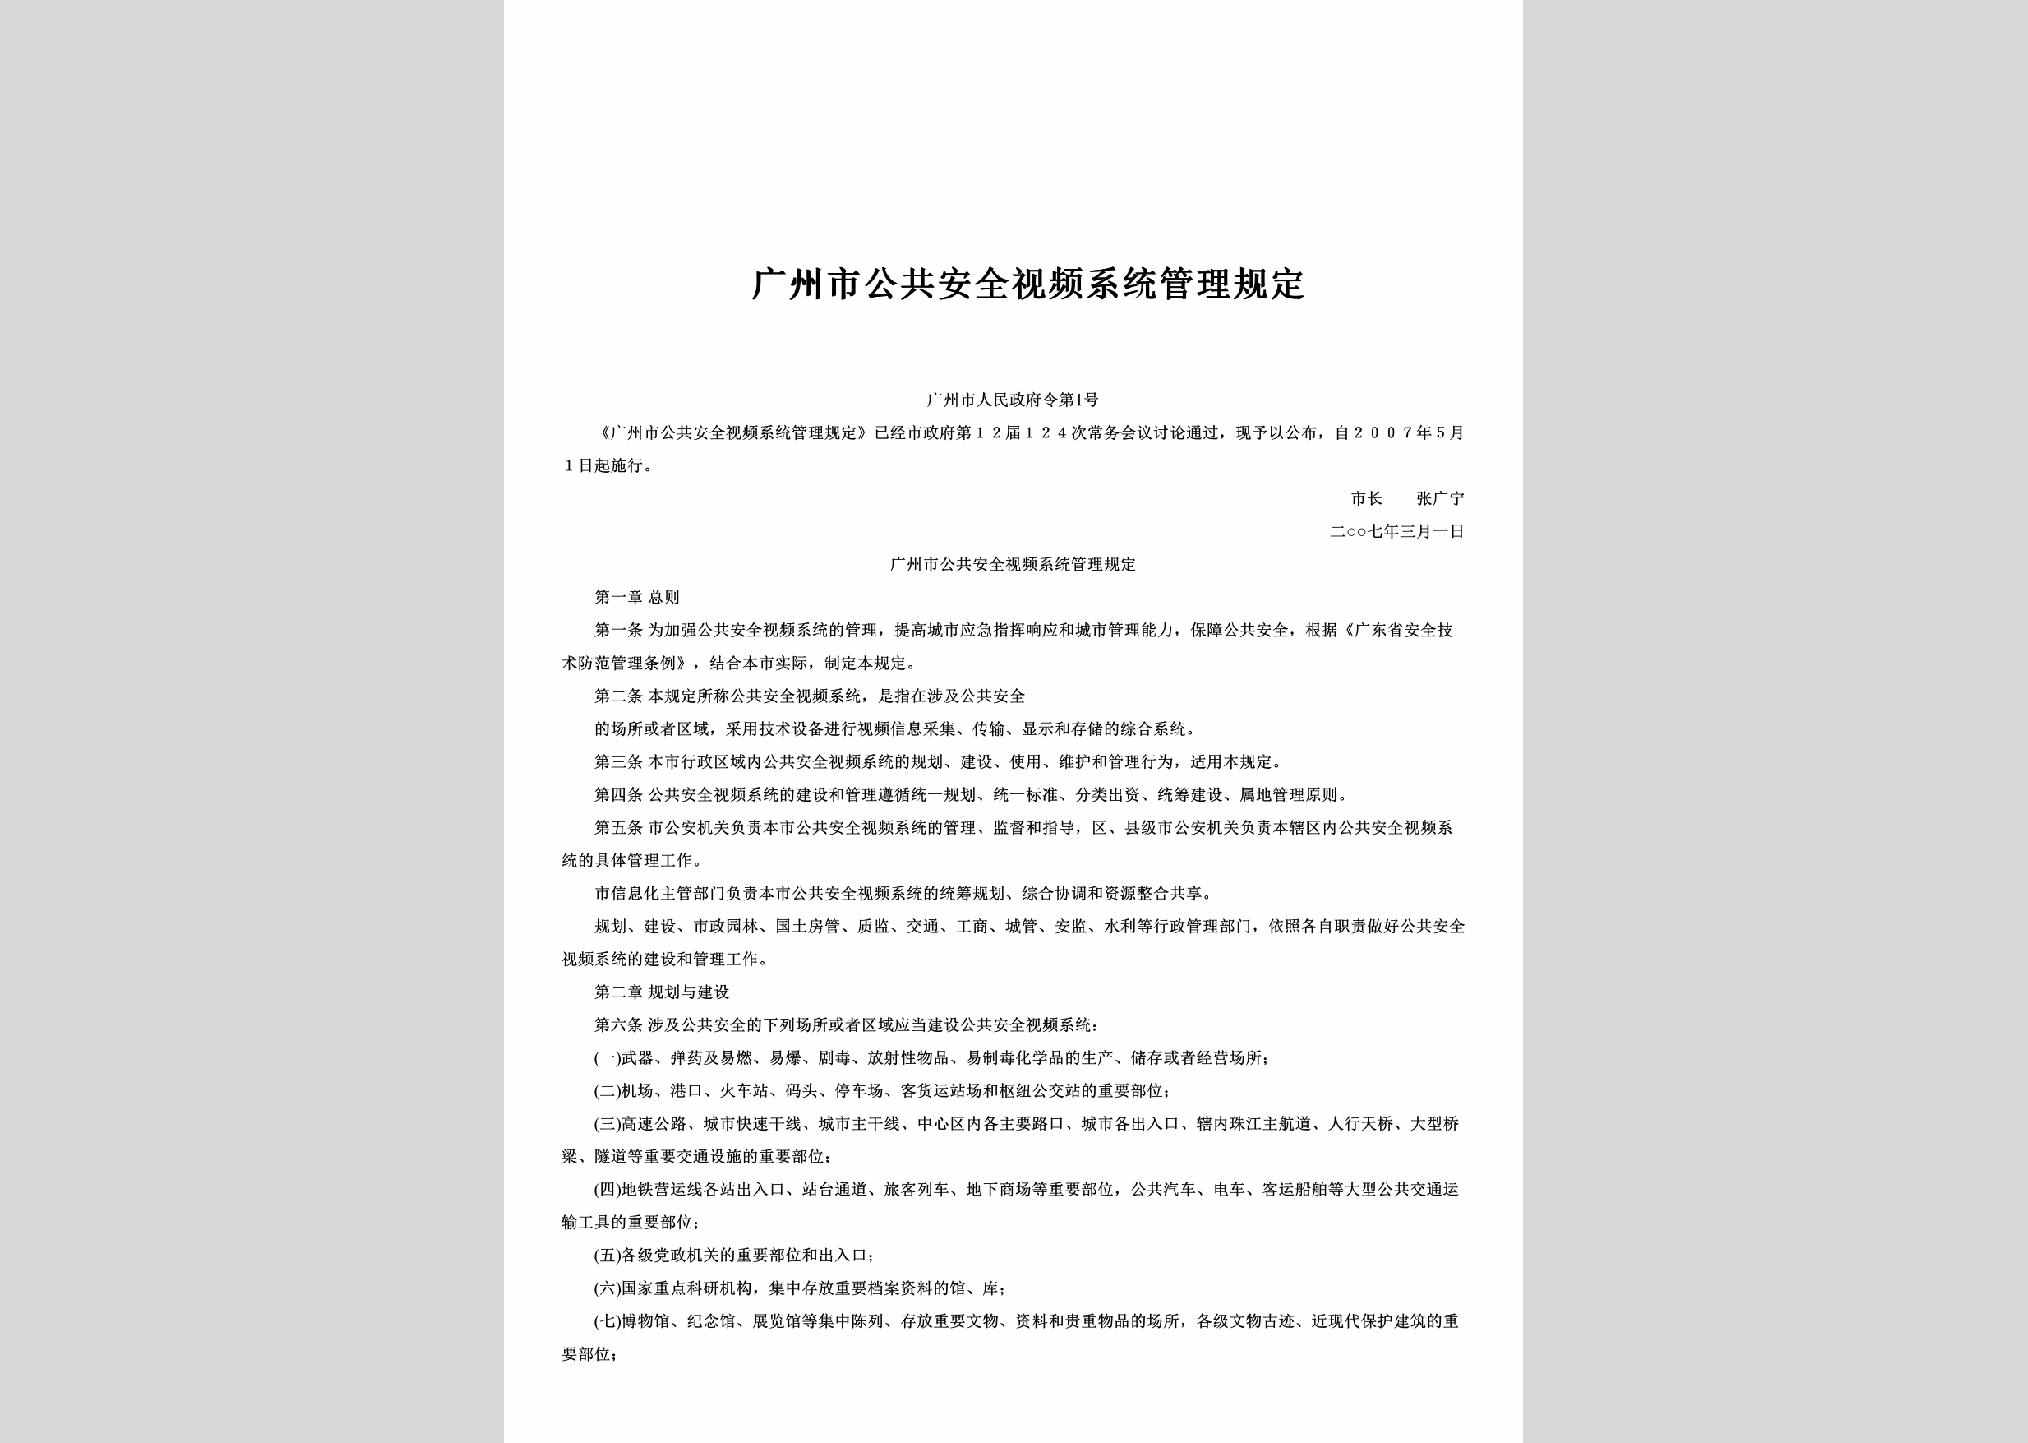 GZRMZFL-2007-1：广州市公共安全视频系统管理规定